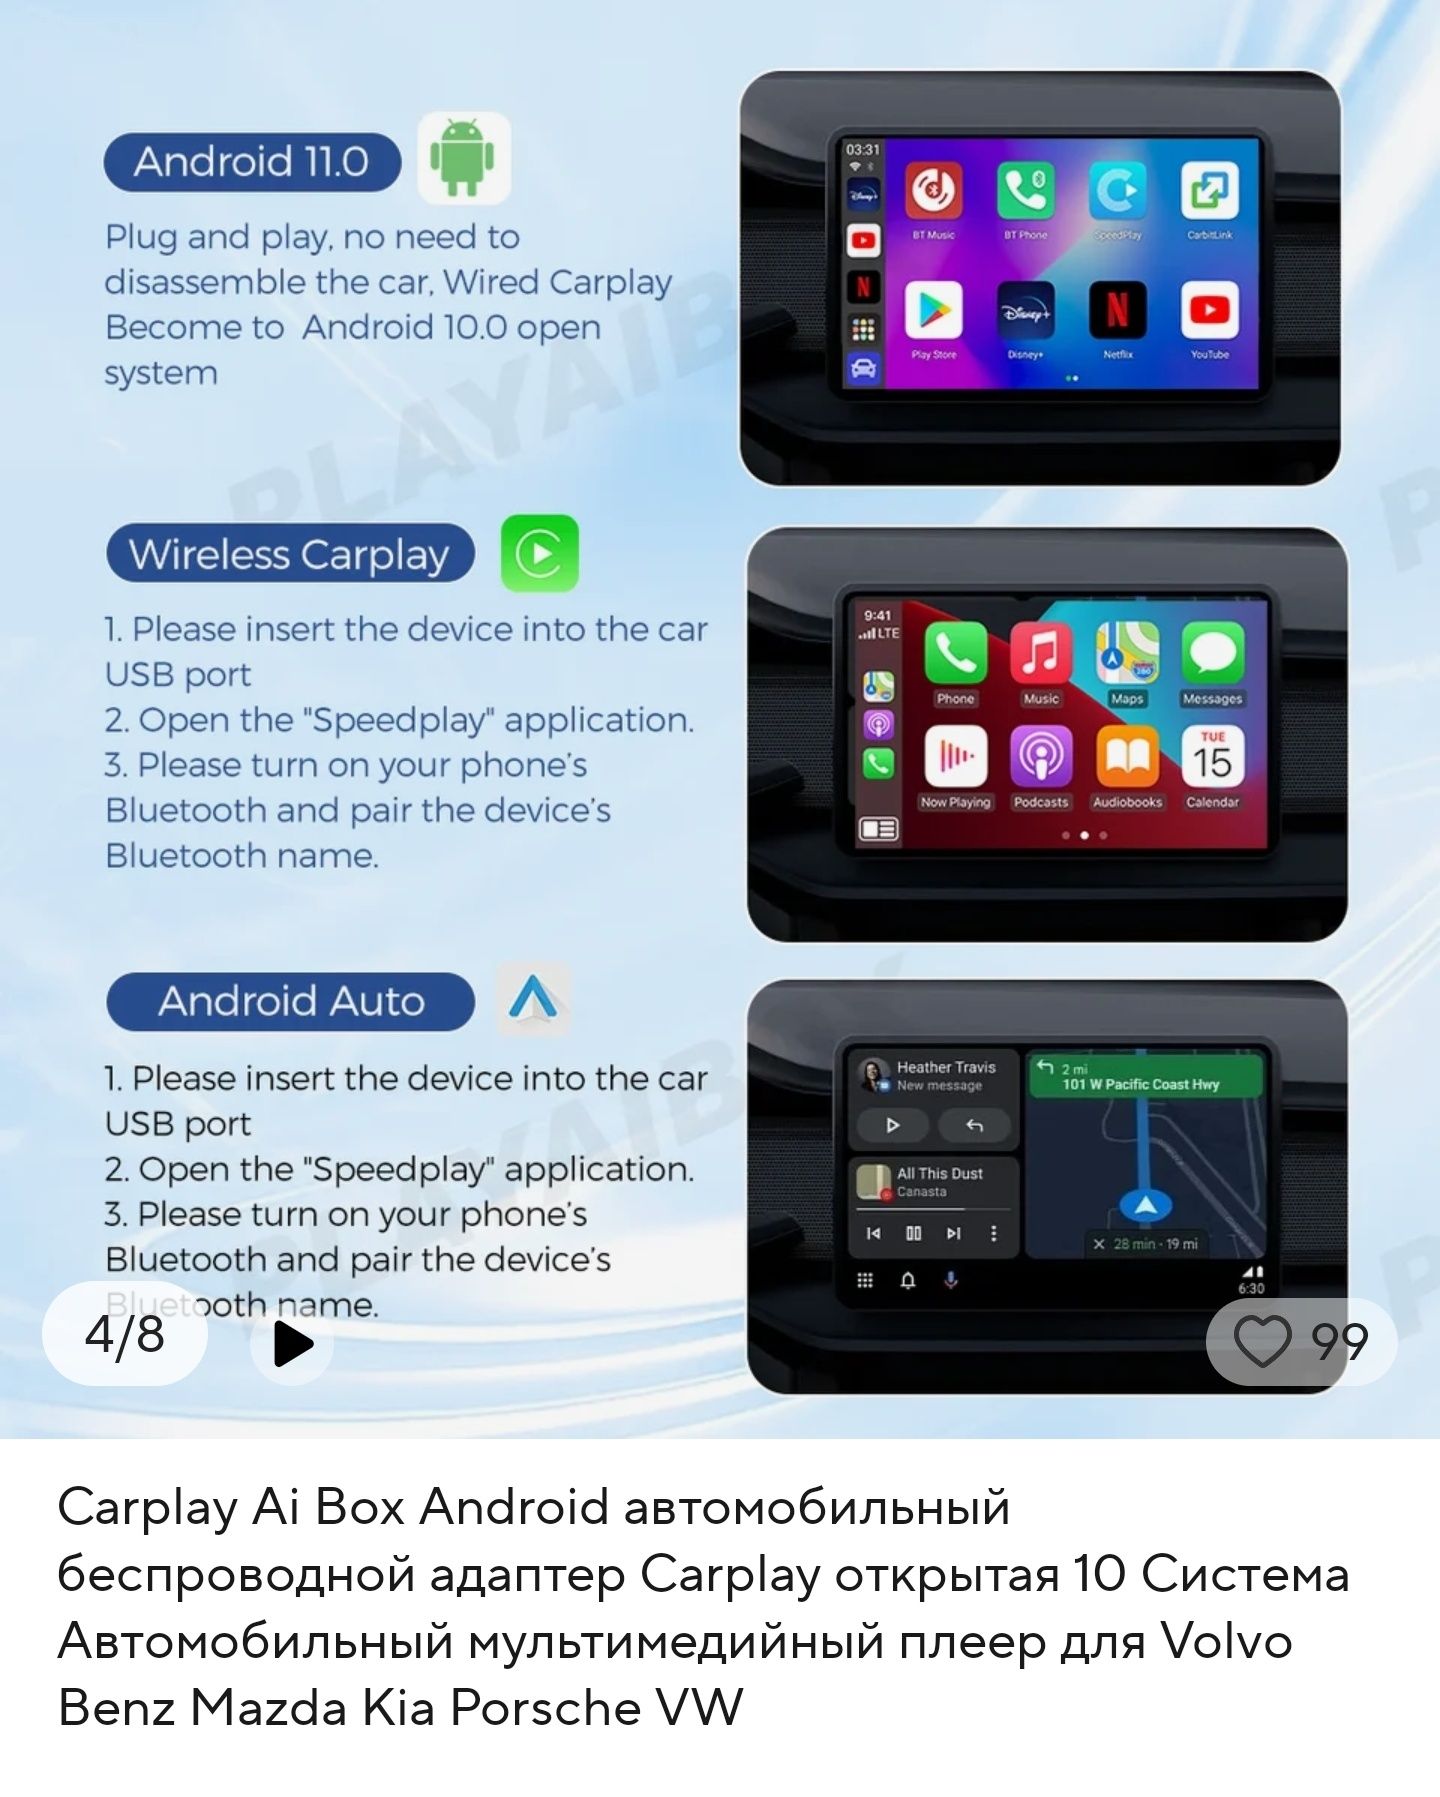 Carplay AI box Android мултимедиен плеър